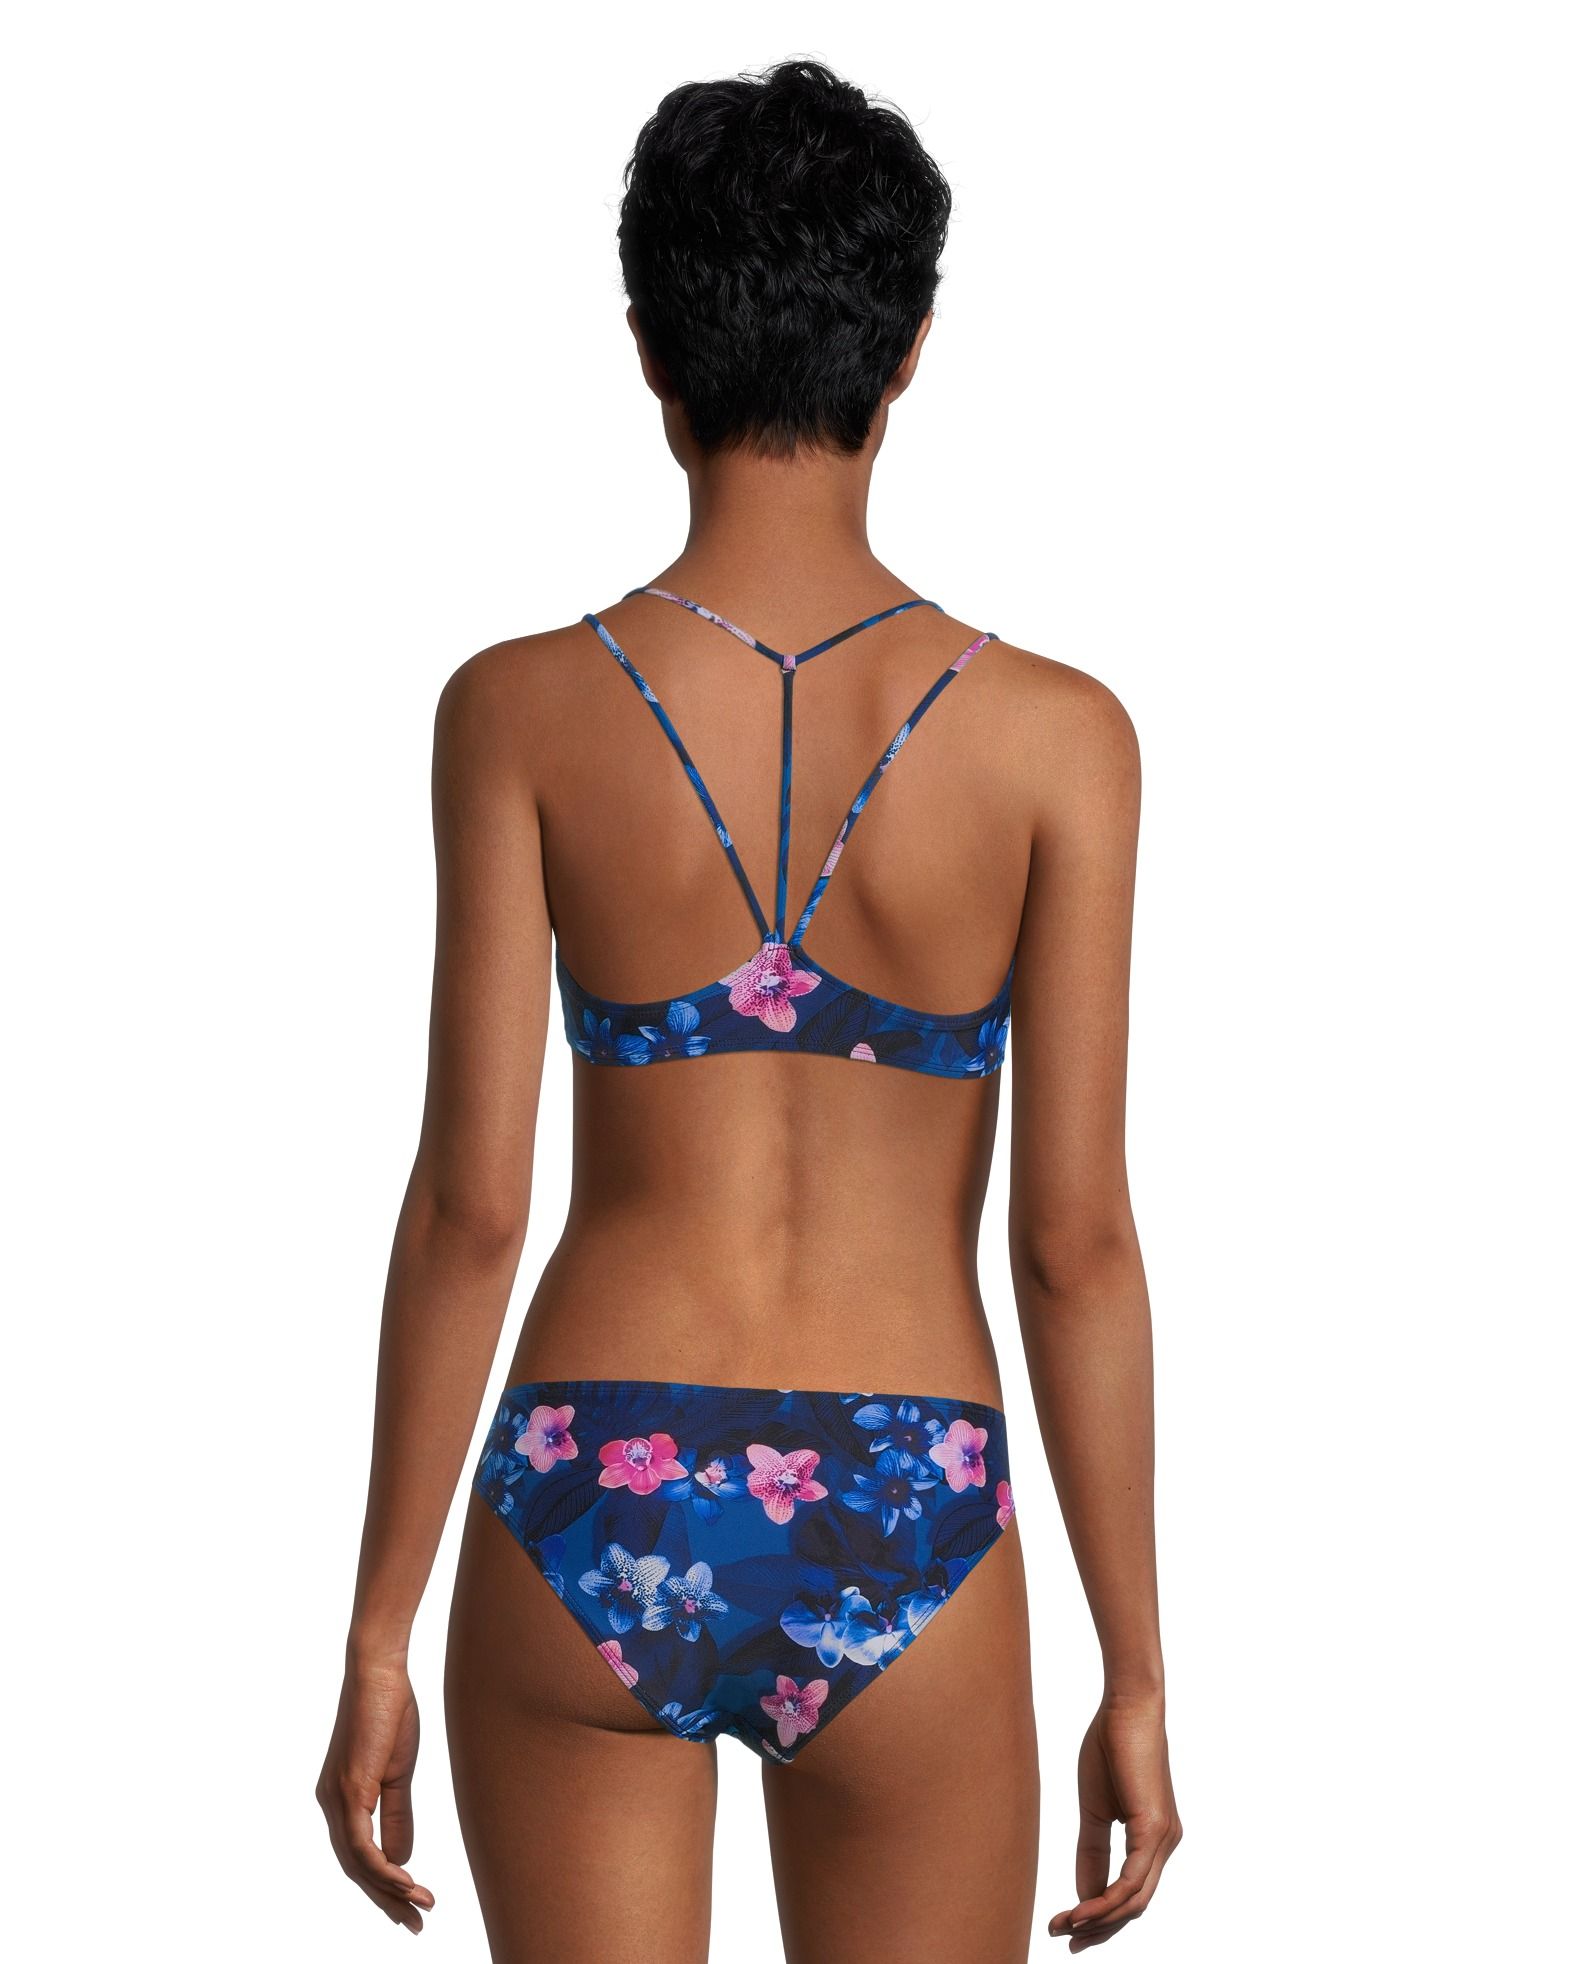 Ripzone Women's Mara Triangle Swim Suit Top